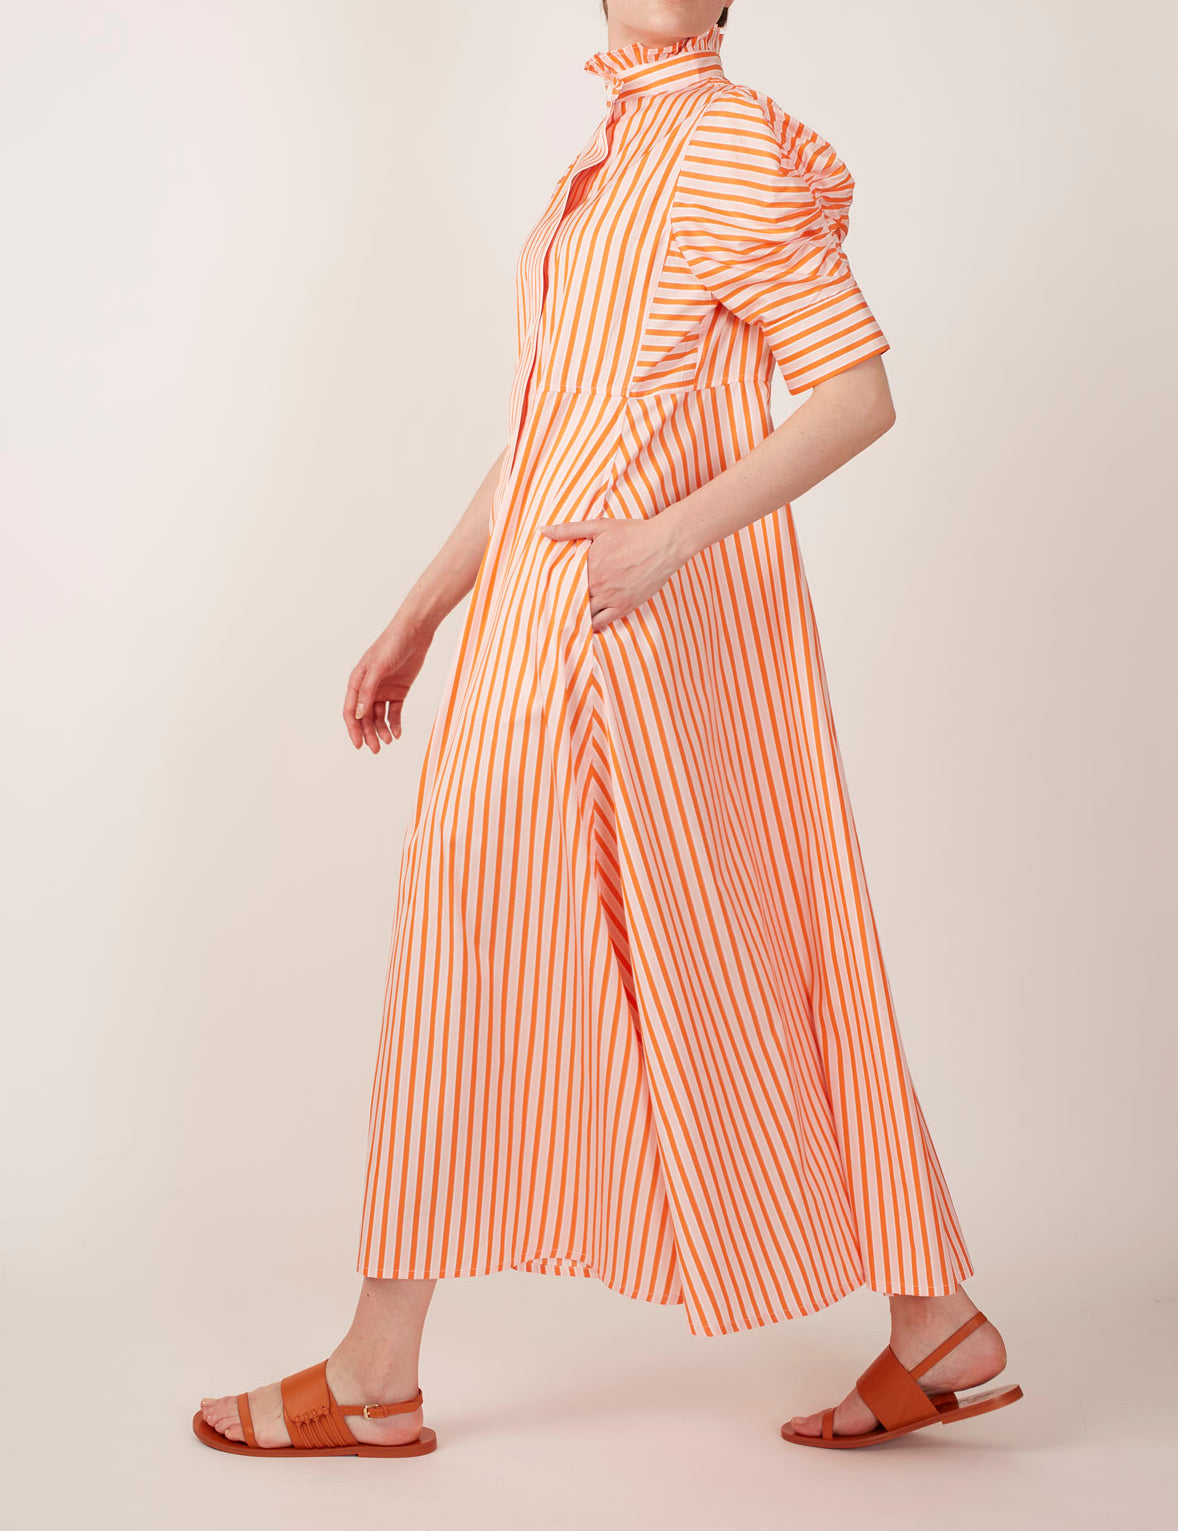 Side view of Venetia Mayfair - Orange, Salmon & White Dress by Thierry Colson